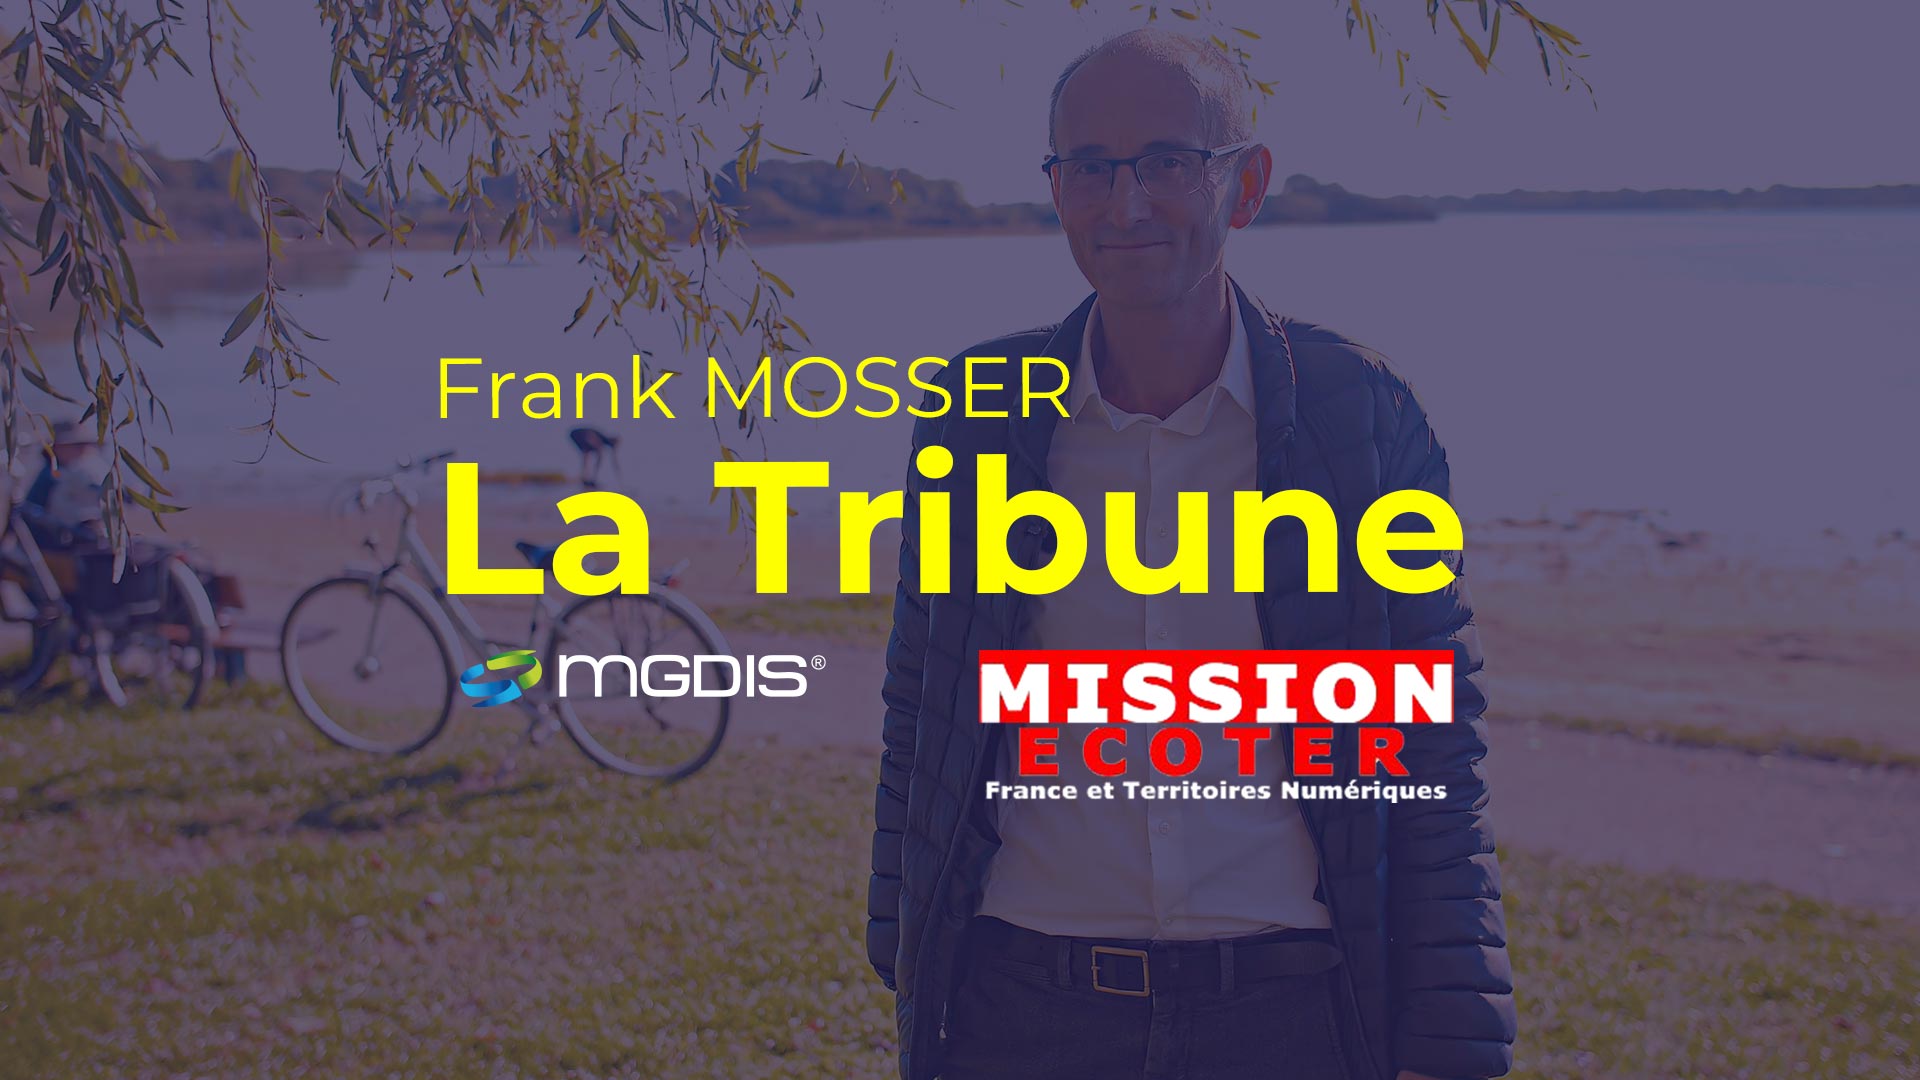 Mission-ECOTER-MGDIS-Frank-MOSSER-2022-04-01